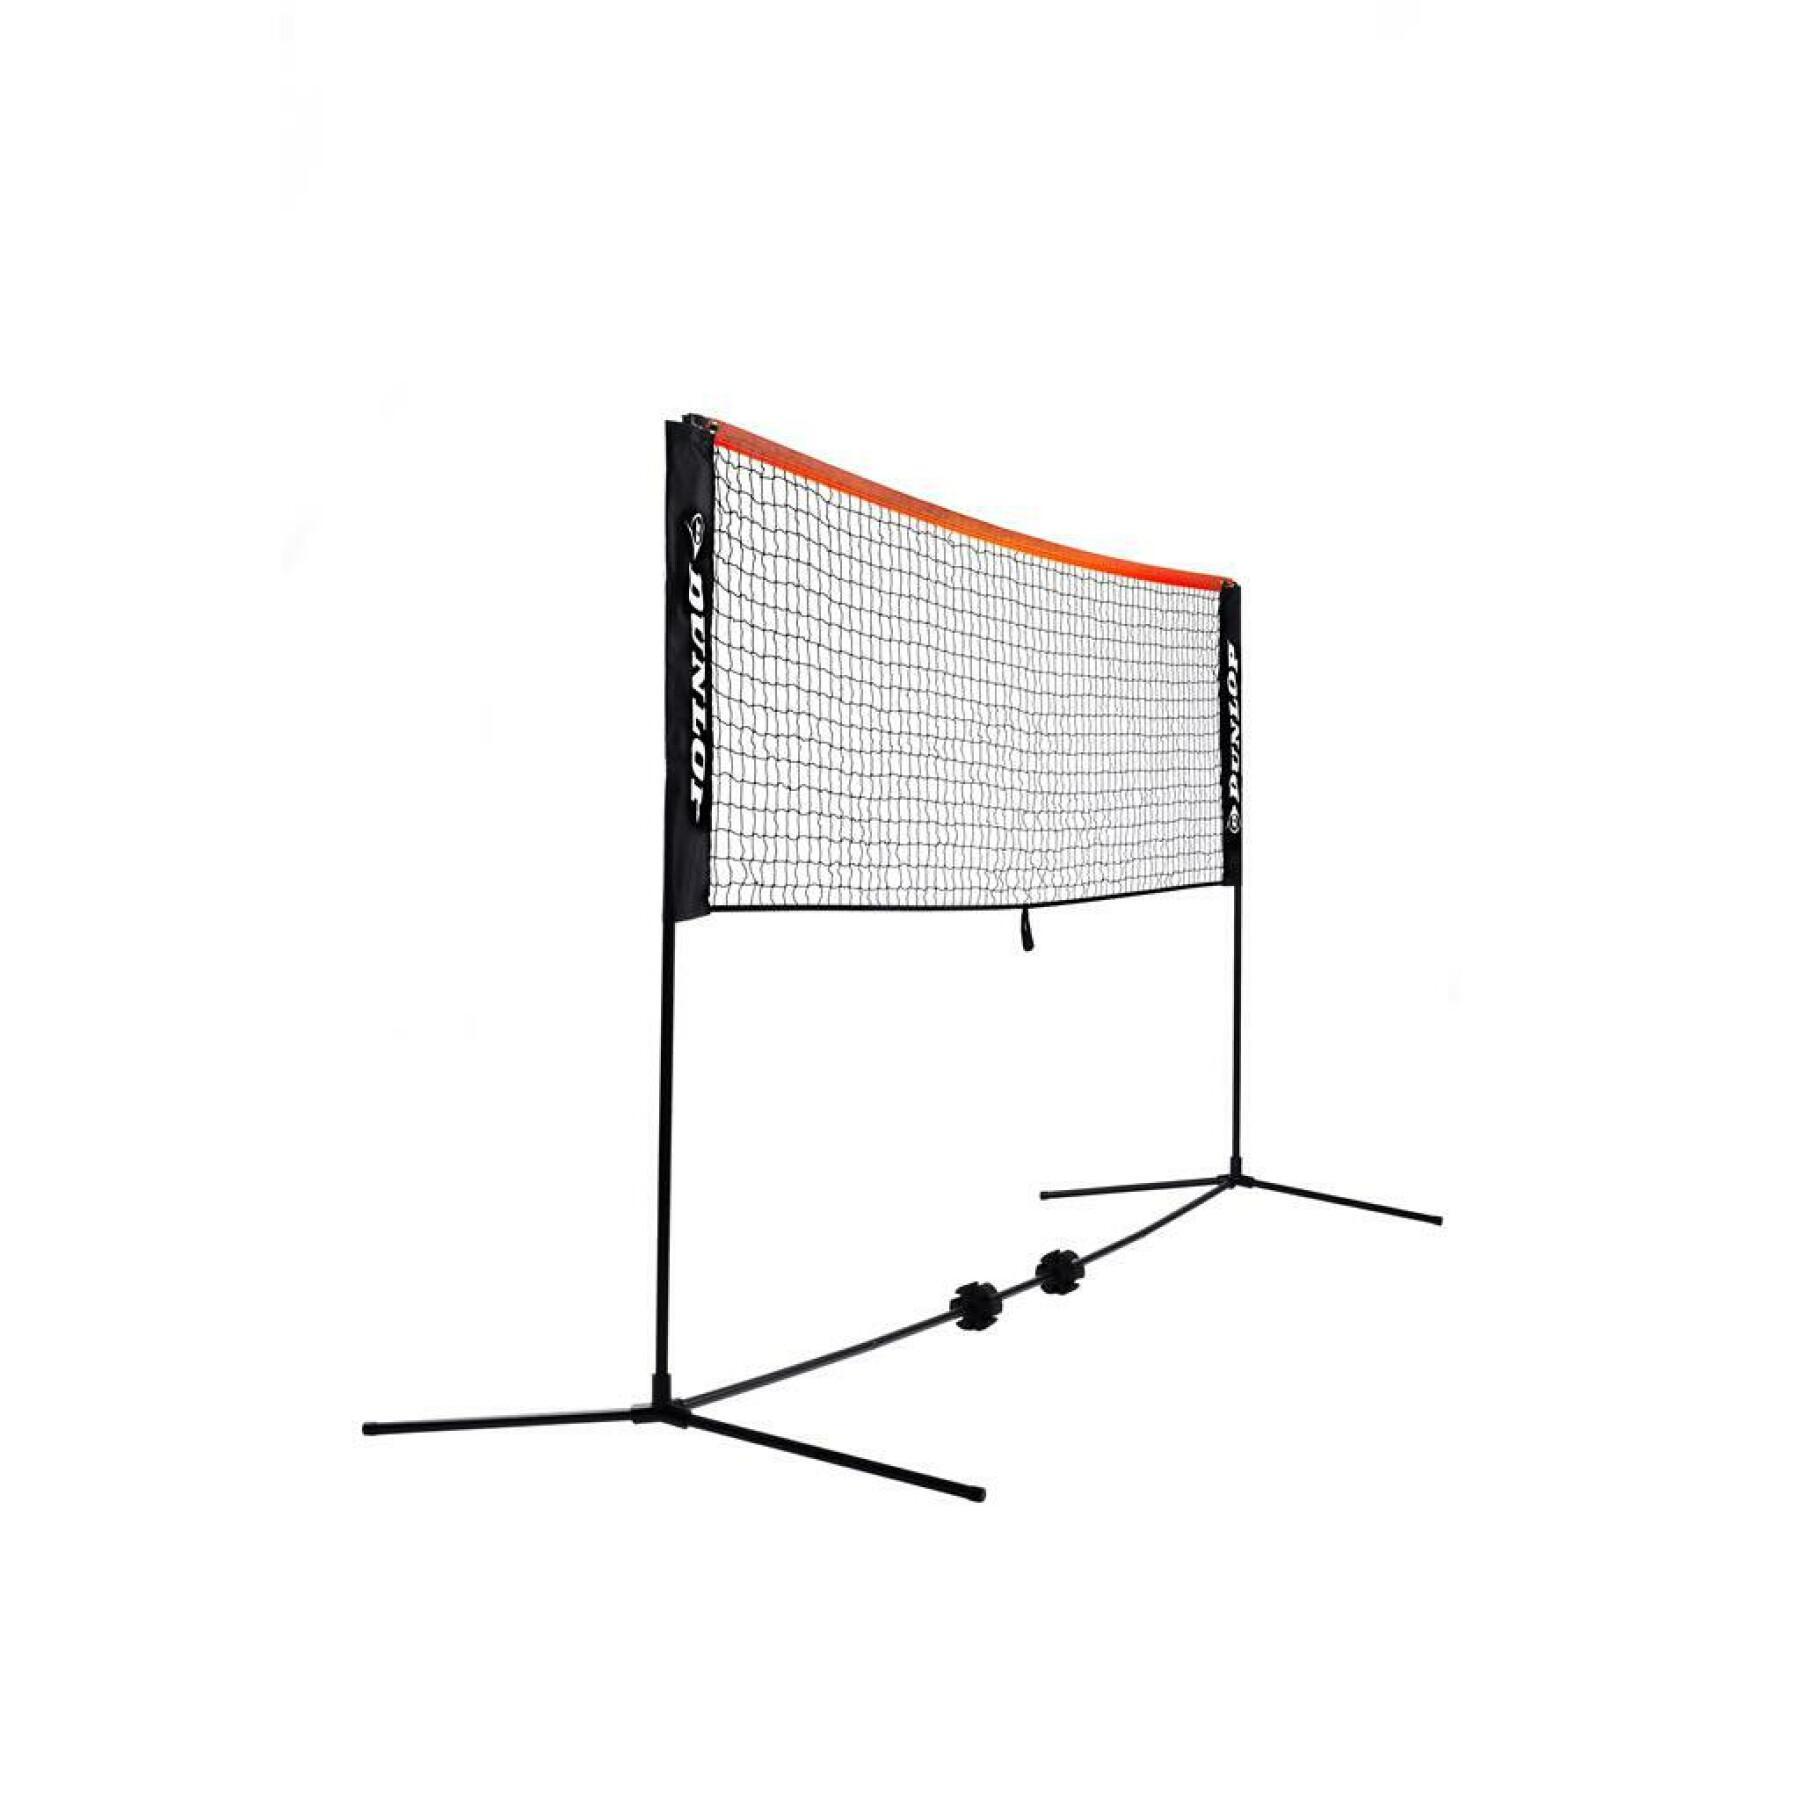 Netz Dunlop mini tennis/badminton